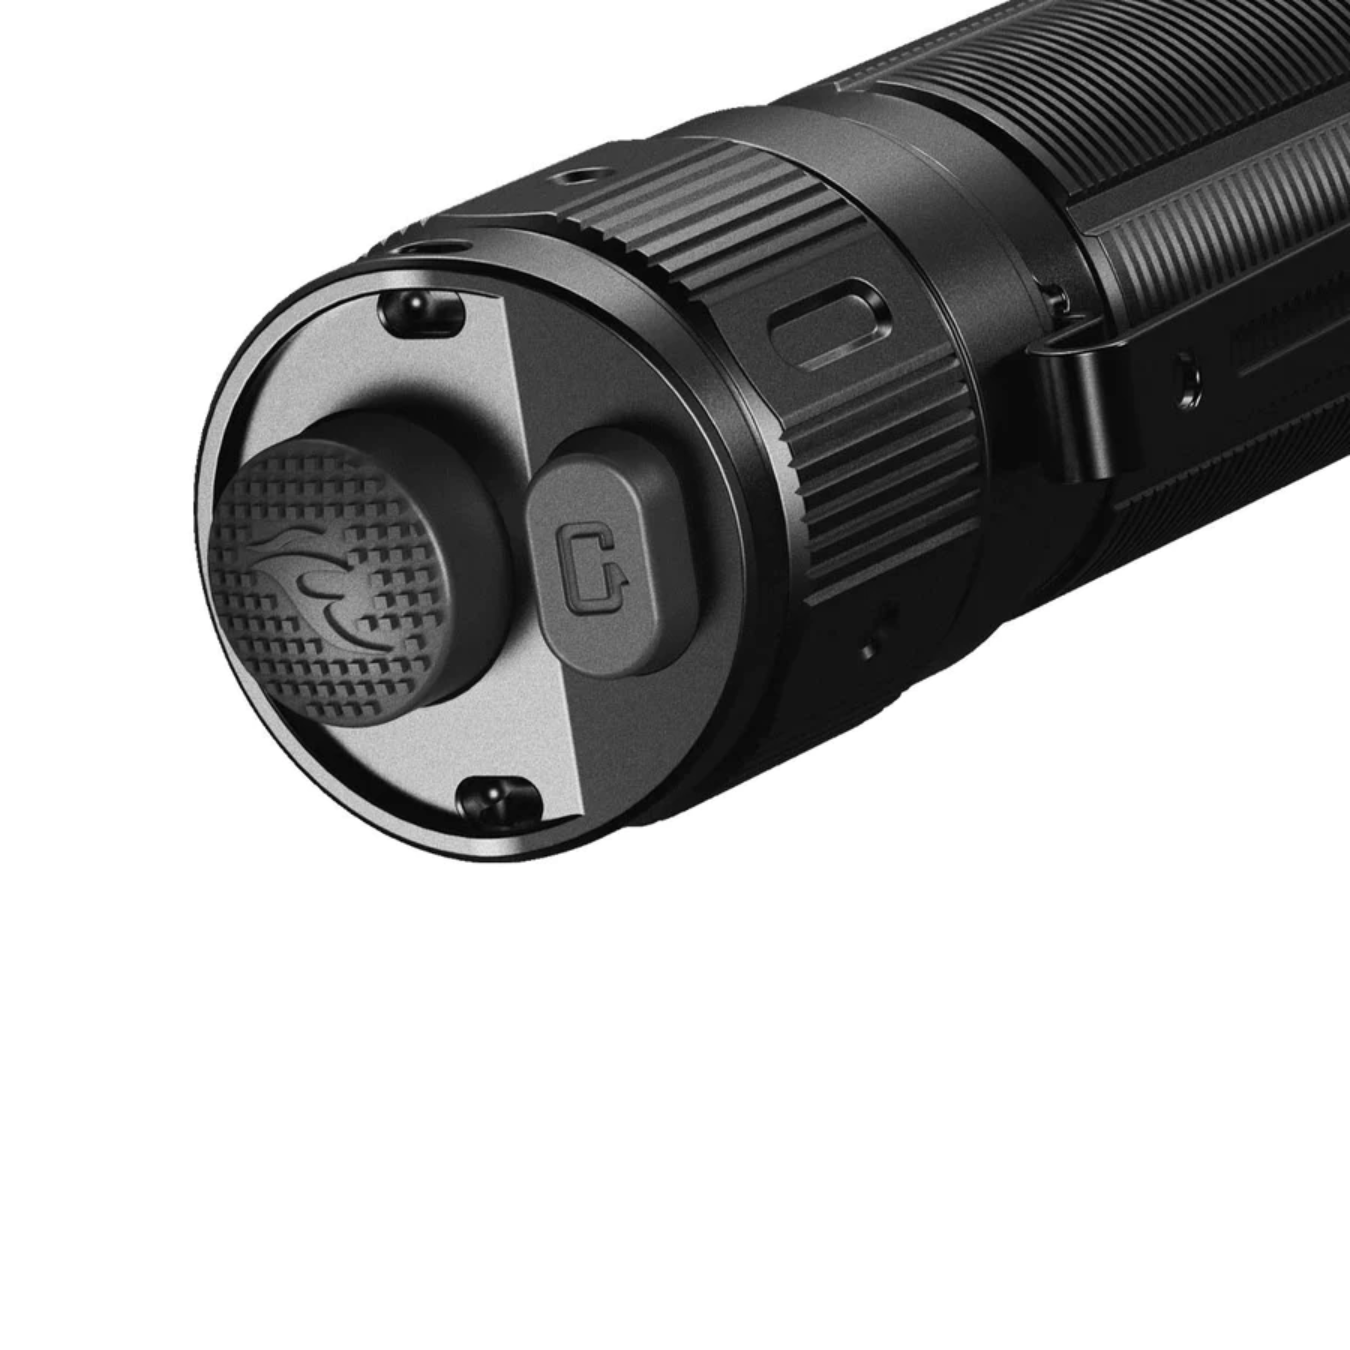 Fenix TK20R V2.0 Luminus SFT70 Cool White LED 3000L Rechargeable Tactical Flashlight